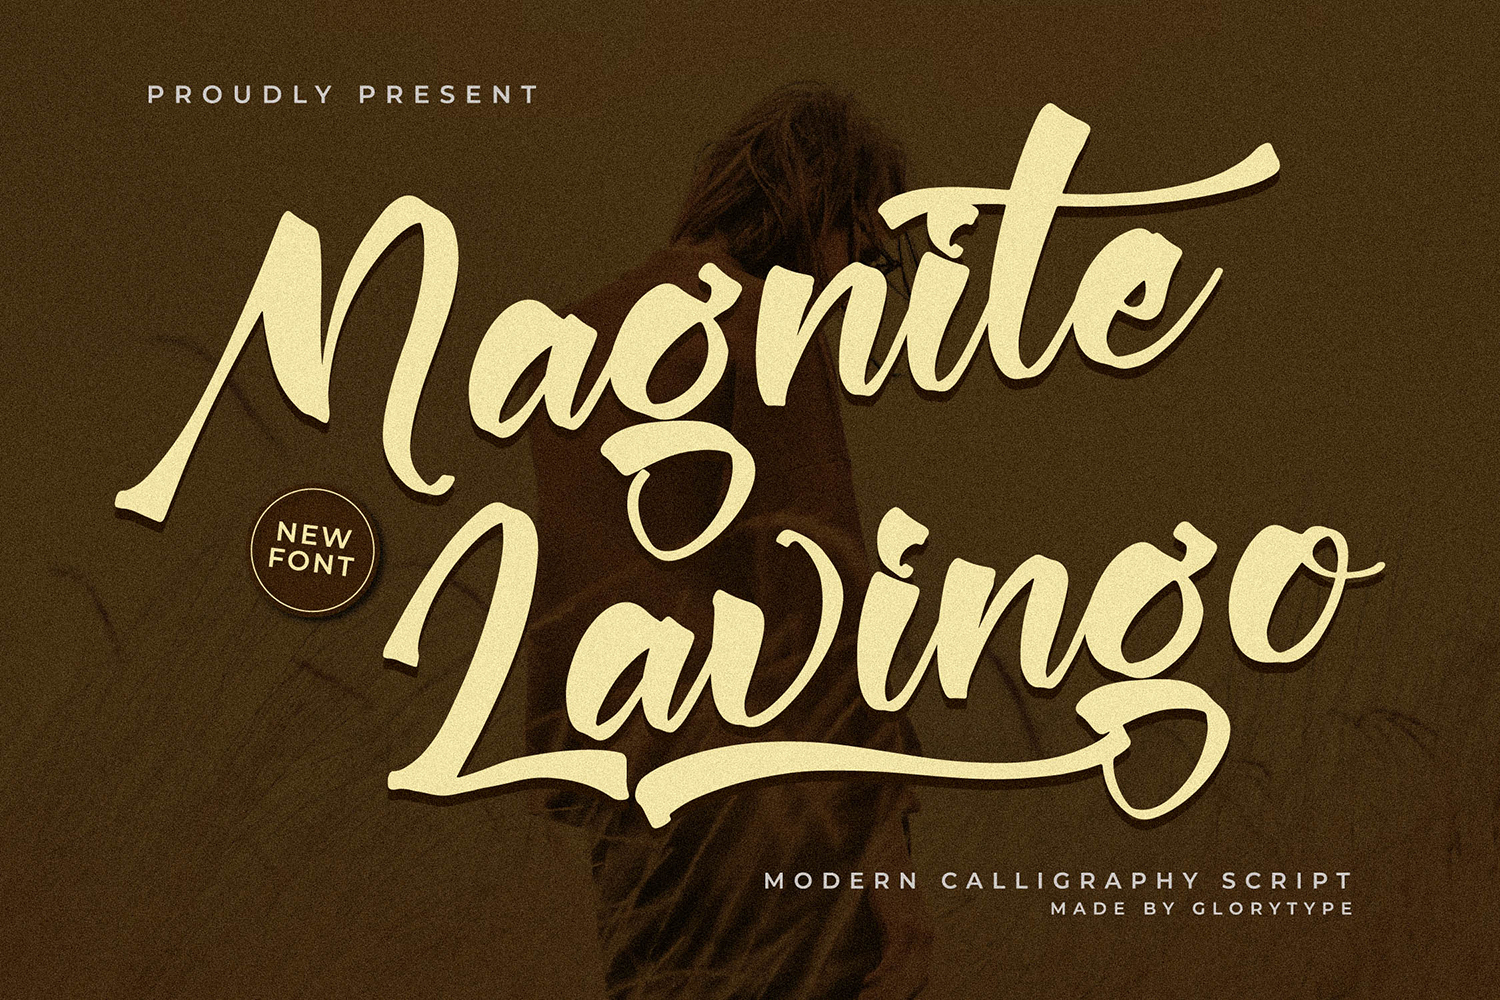 Magnite Lavingo Free Font